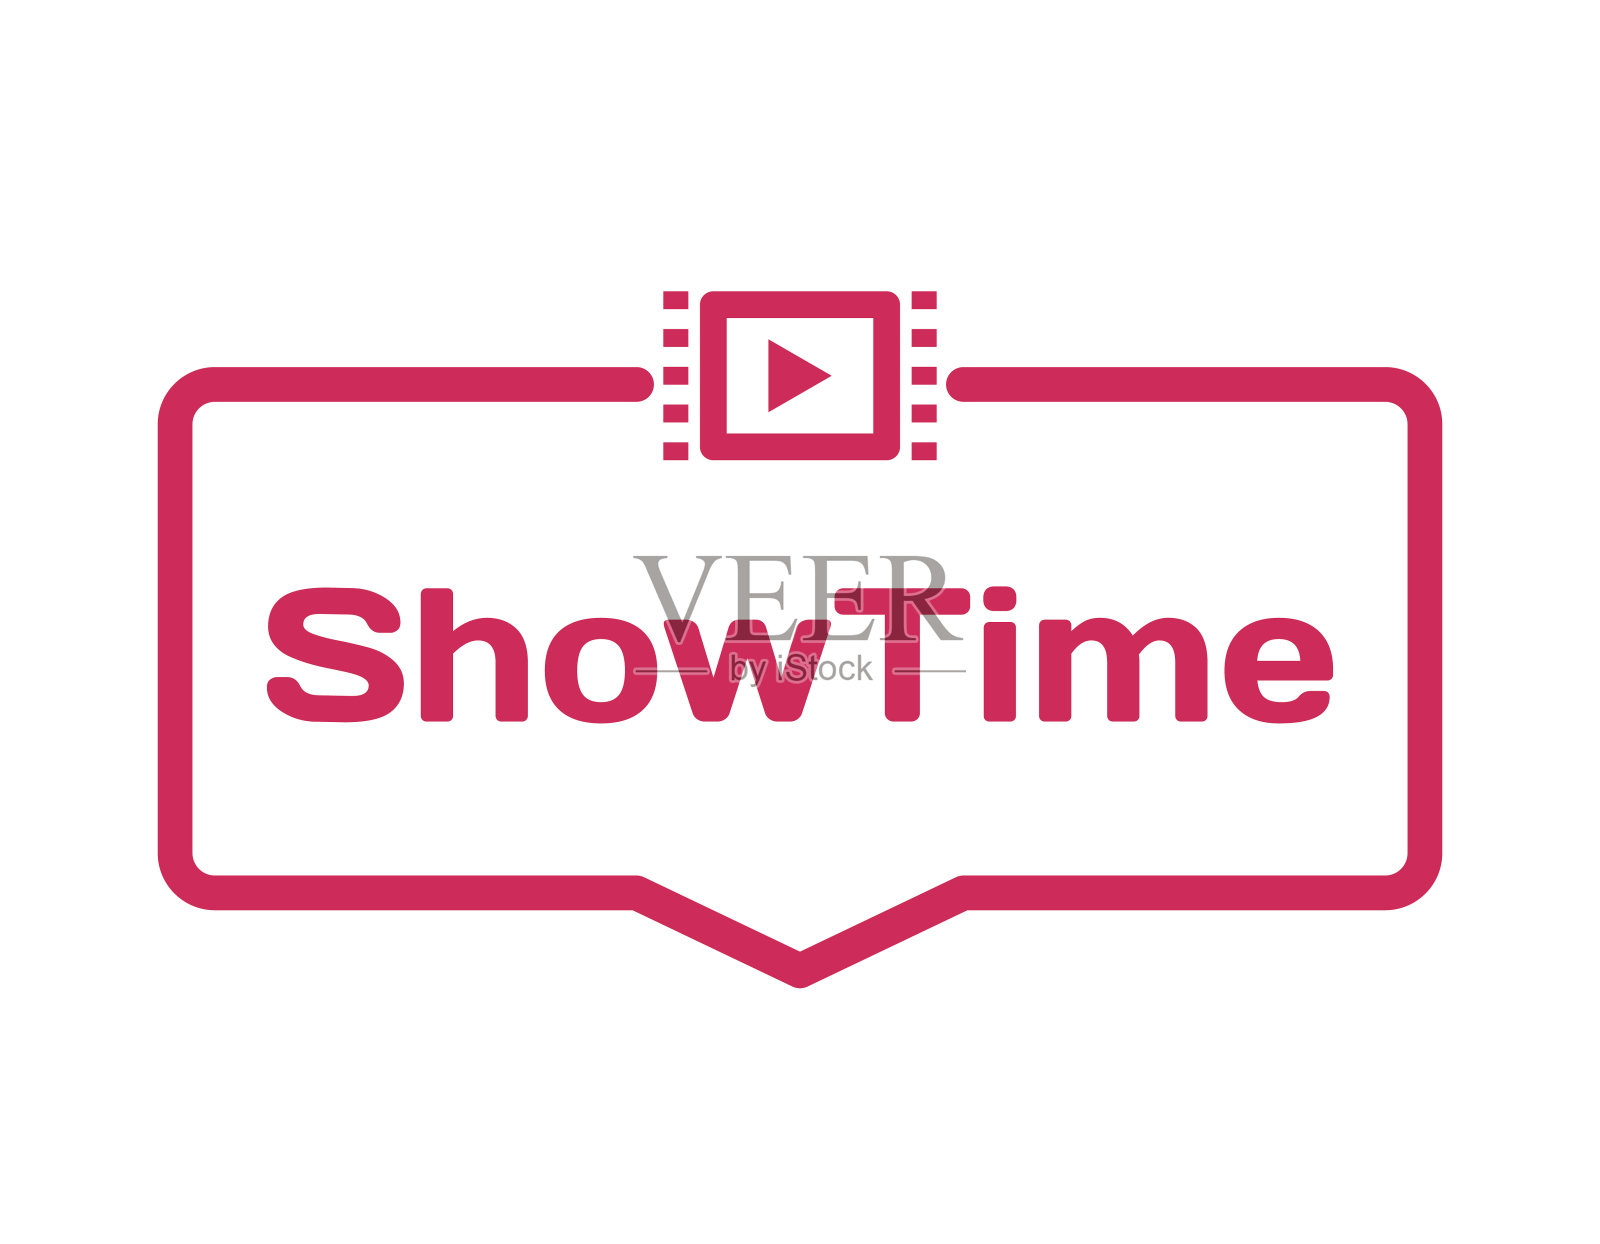 Showtime模板对话框气泡在白色背景上的平面风格。依据电影图标为各种文字情节。为卡片，横幅，标签，笔记，博客文章的引用盖章。向量插画图片素材